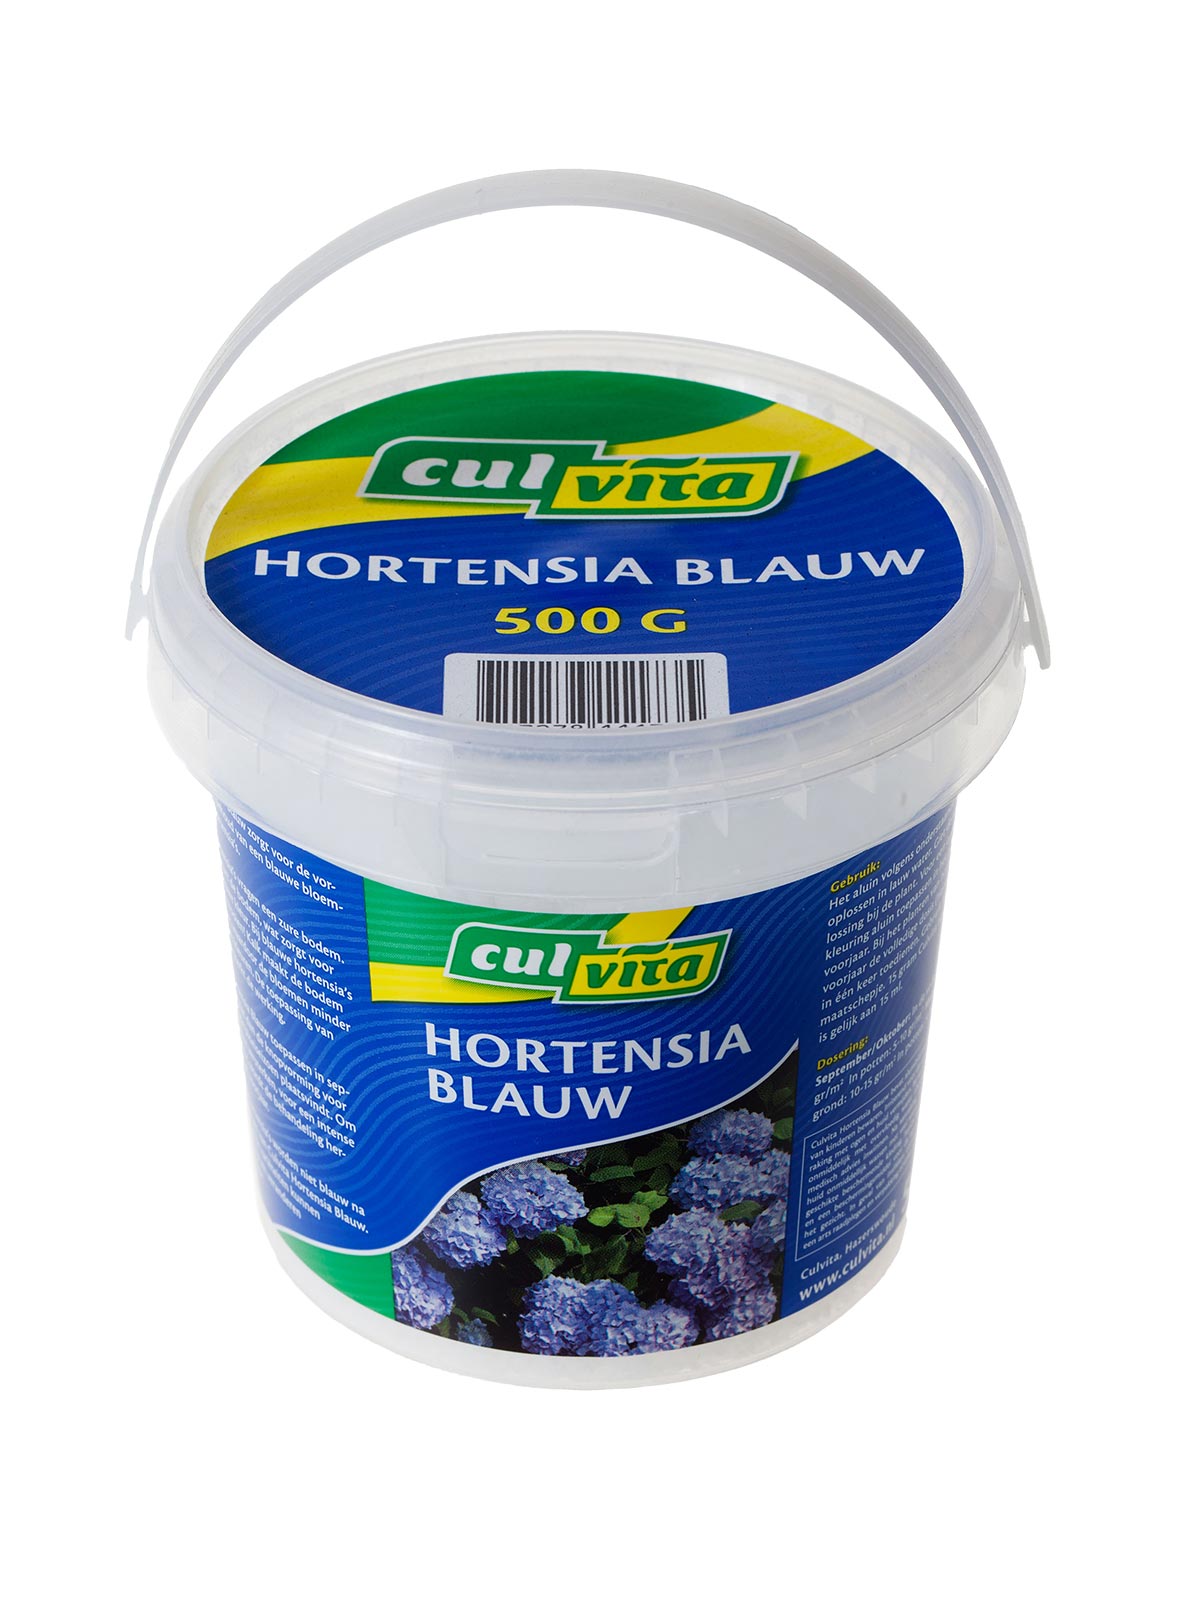 Culvita Hortensia Blauw | Culvita.nl